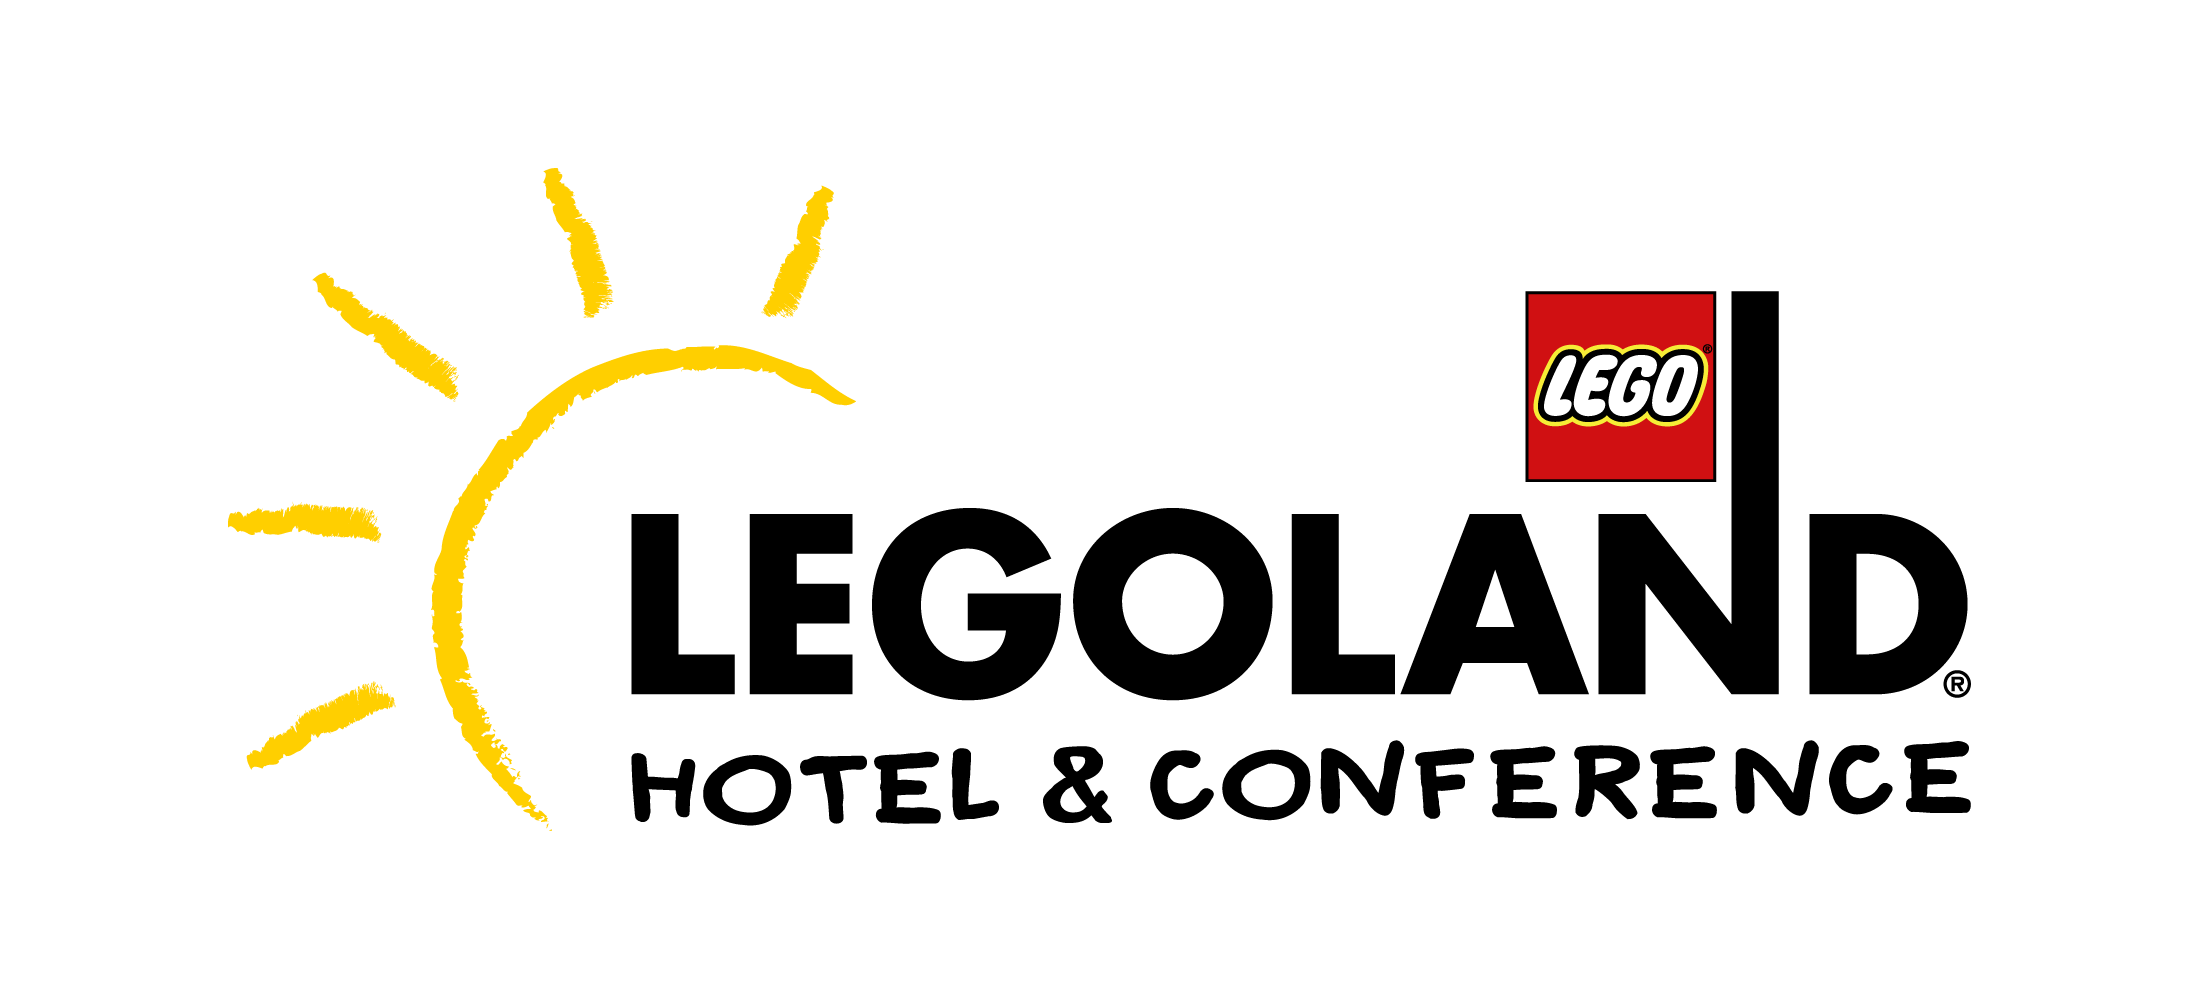 Hotel Legoland logo png